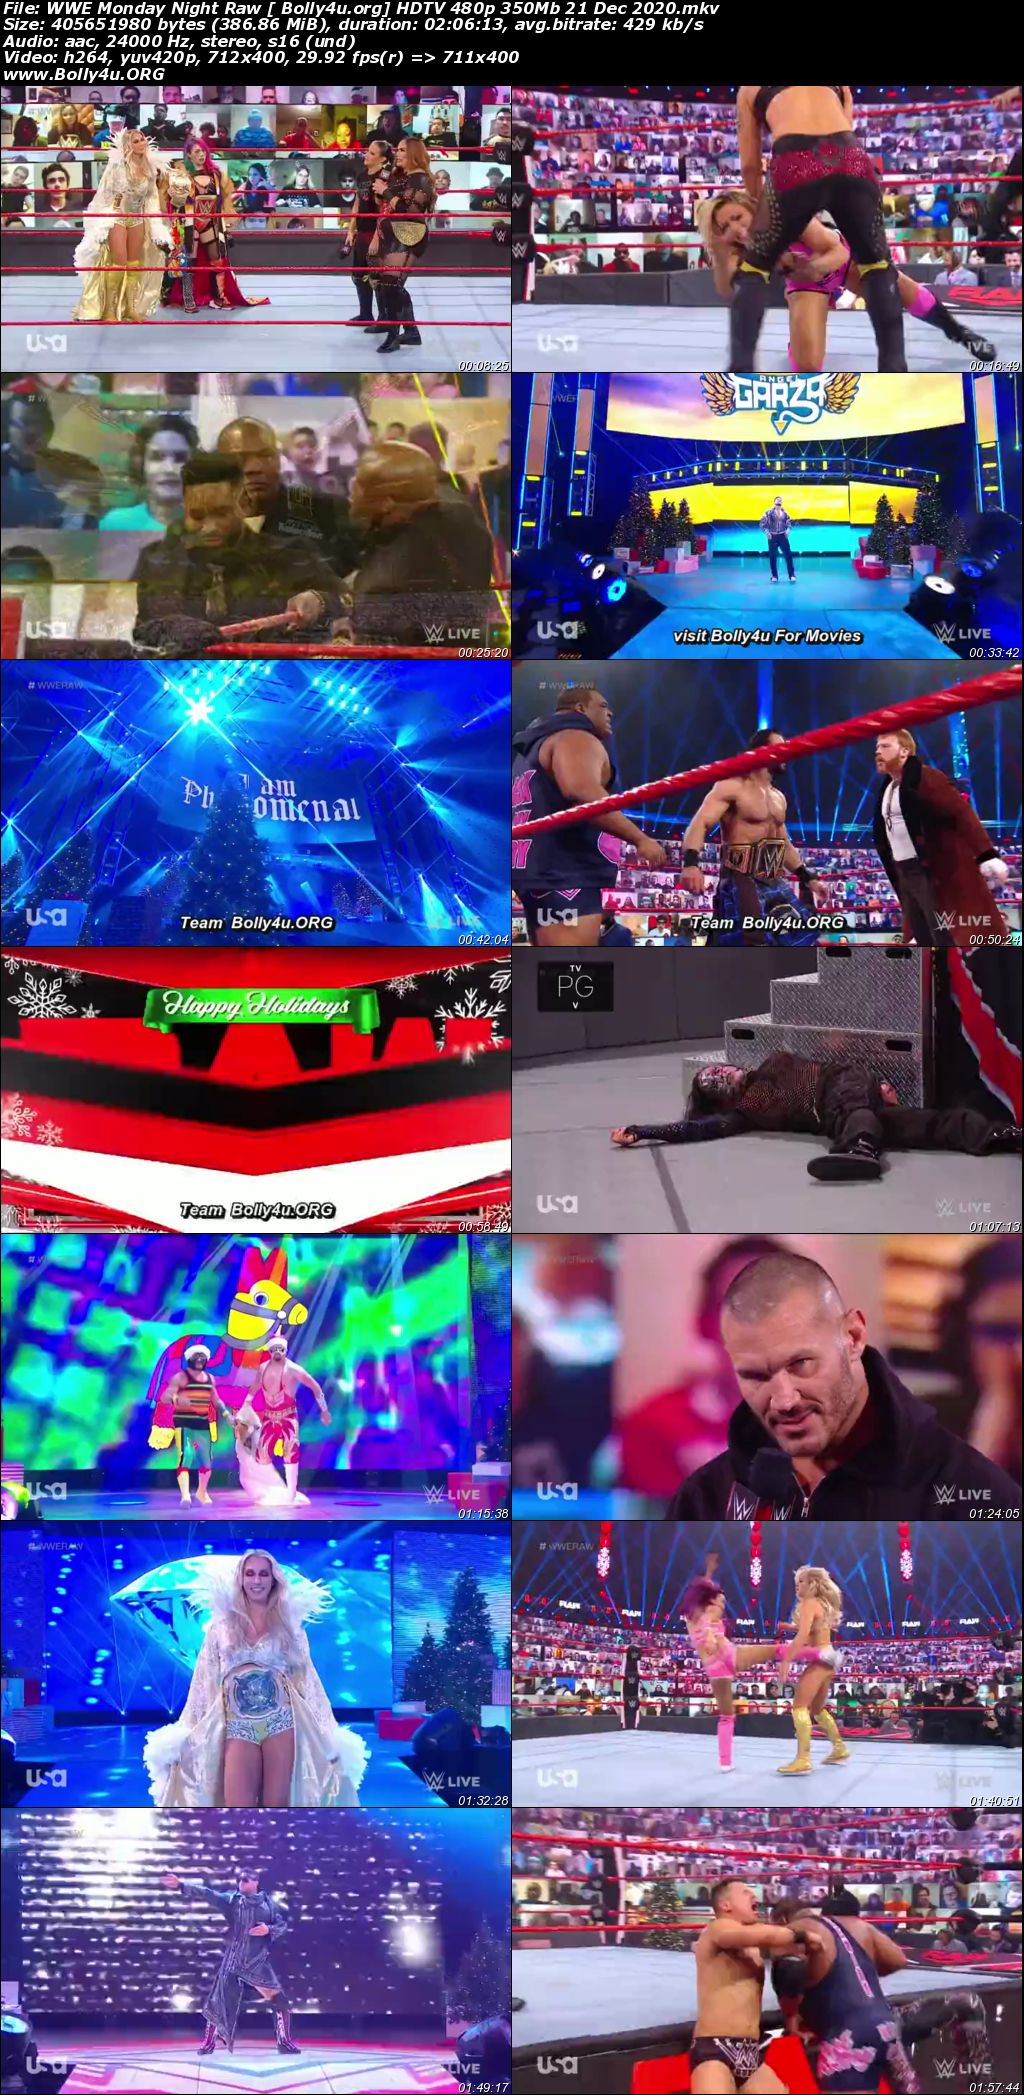 WWE Monday Night Raw HDTV 480p 350Mb 21 Dec 2020 Download